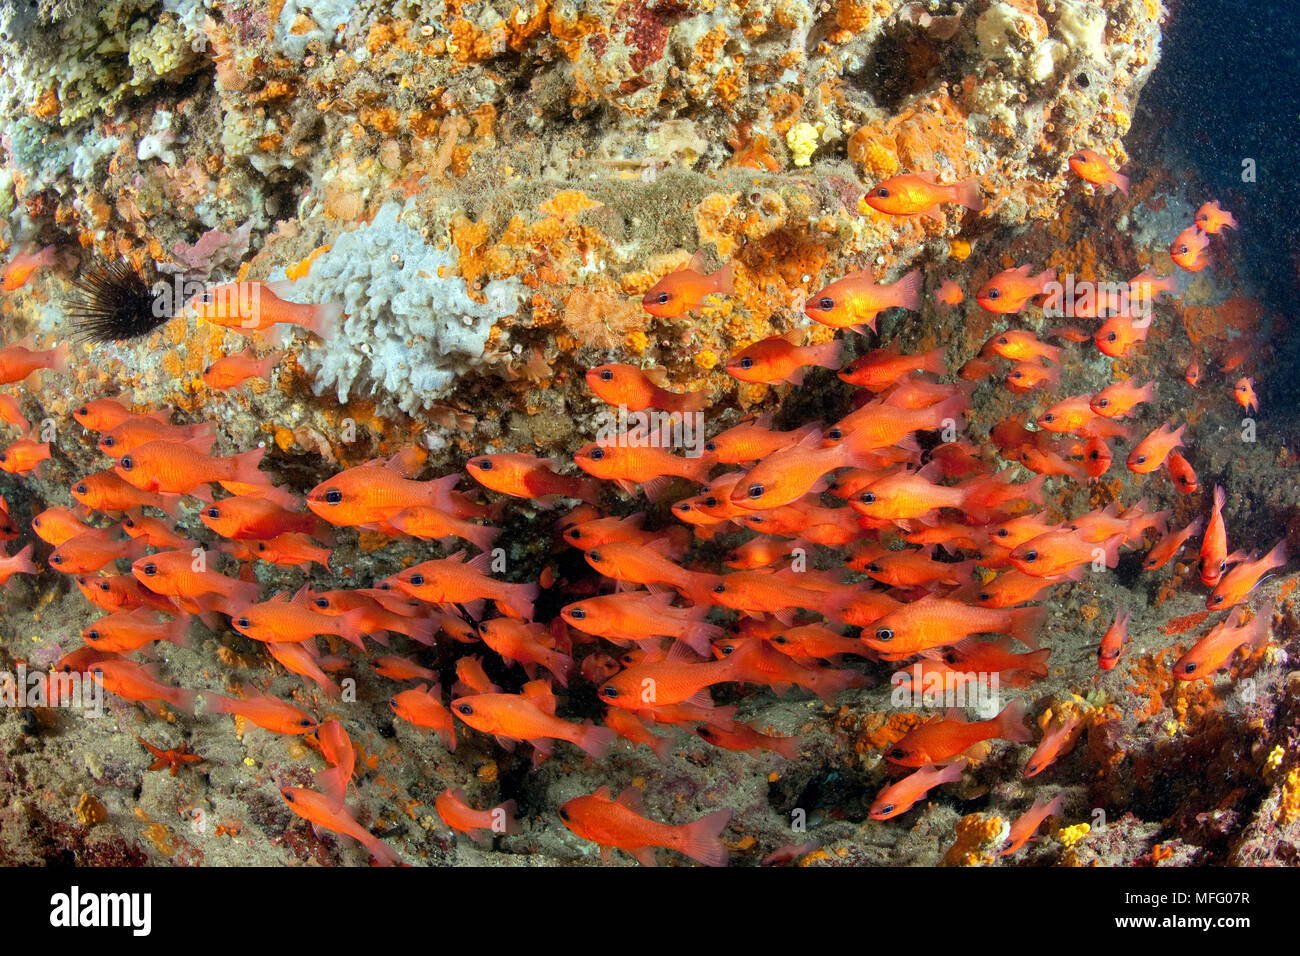 Shoal of Cardinal fish, Apogon imberbis, Ischia Island, Italy, Tyrrhenian Sea, Mediterranean Stock Photo